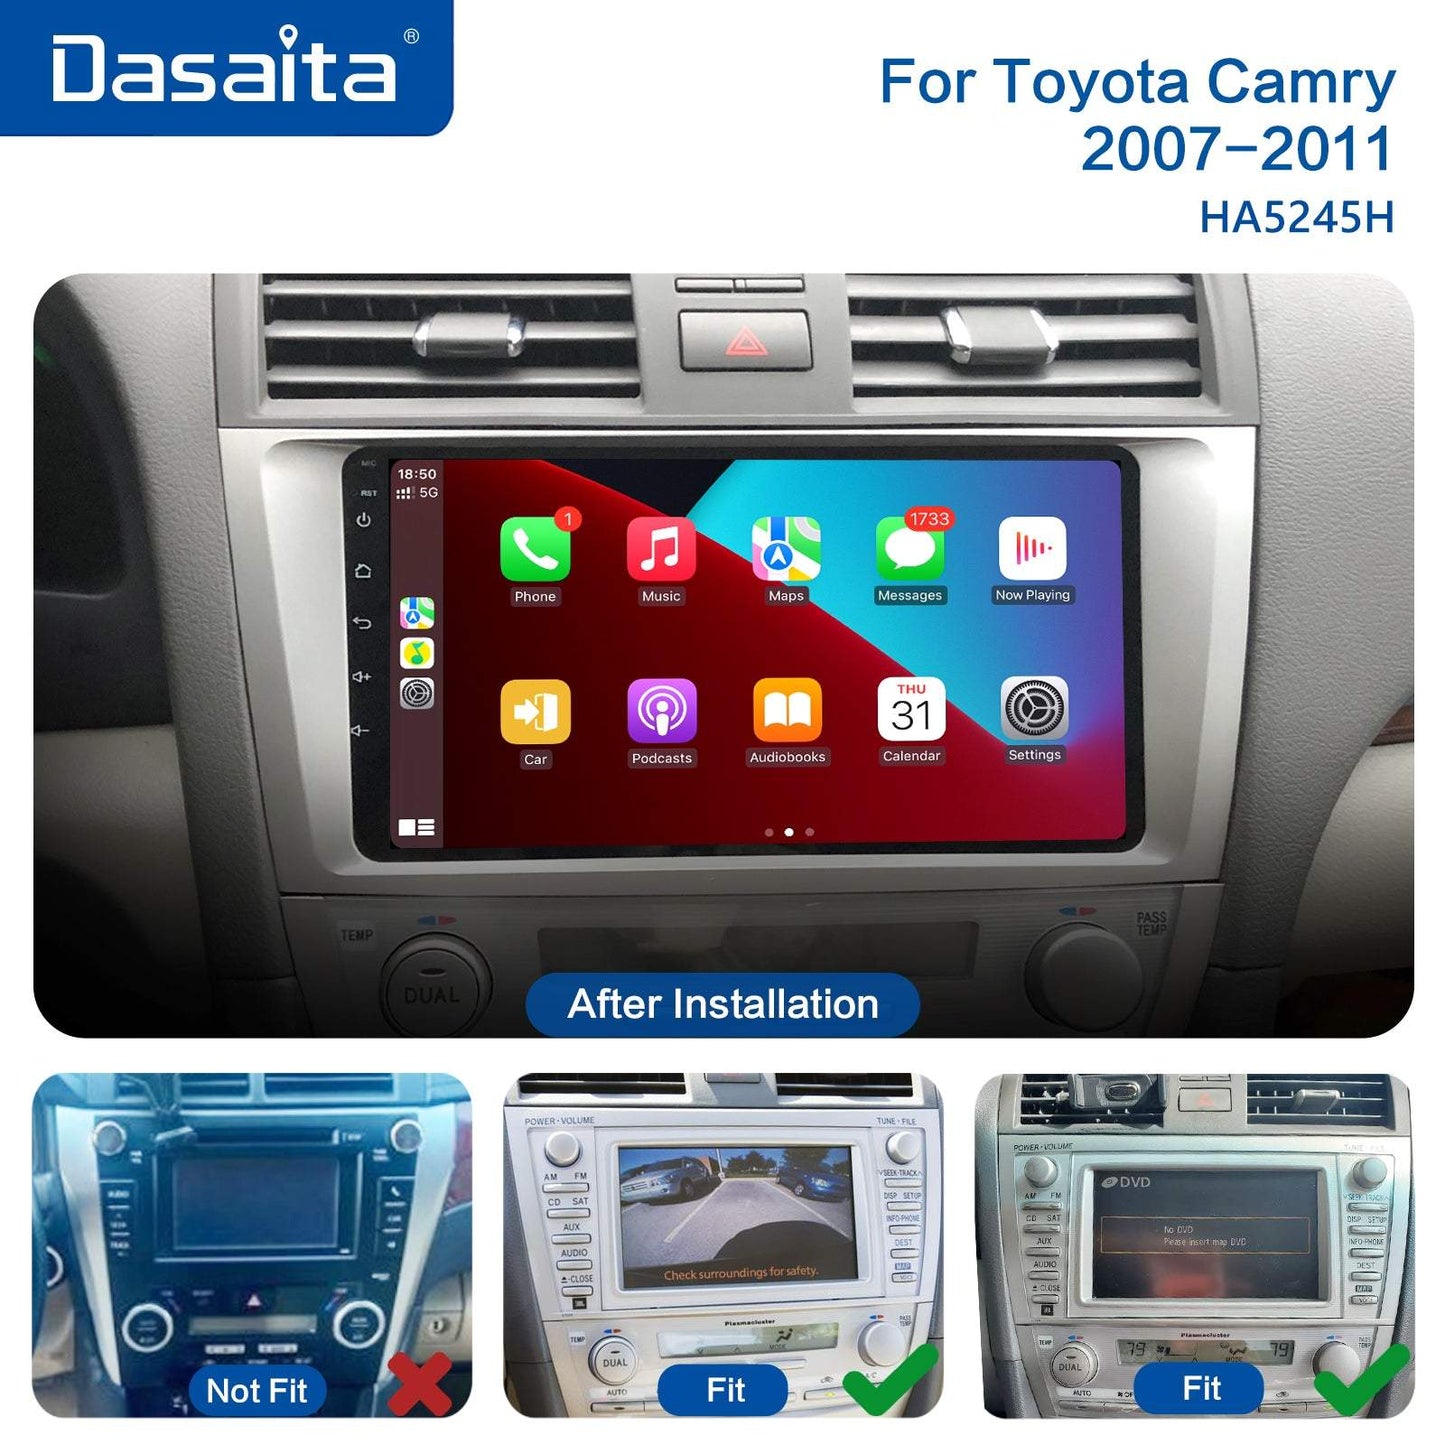 Dasaita MAX10/MAX11 Toyota Camry 2007 2008 2009 2010 2011 Car Stereo 9 Inch Carplay Android Auto PX6 4G+64G Android10/Android11 1280*720 DSP AHD Radio